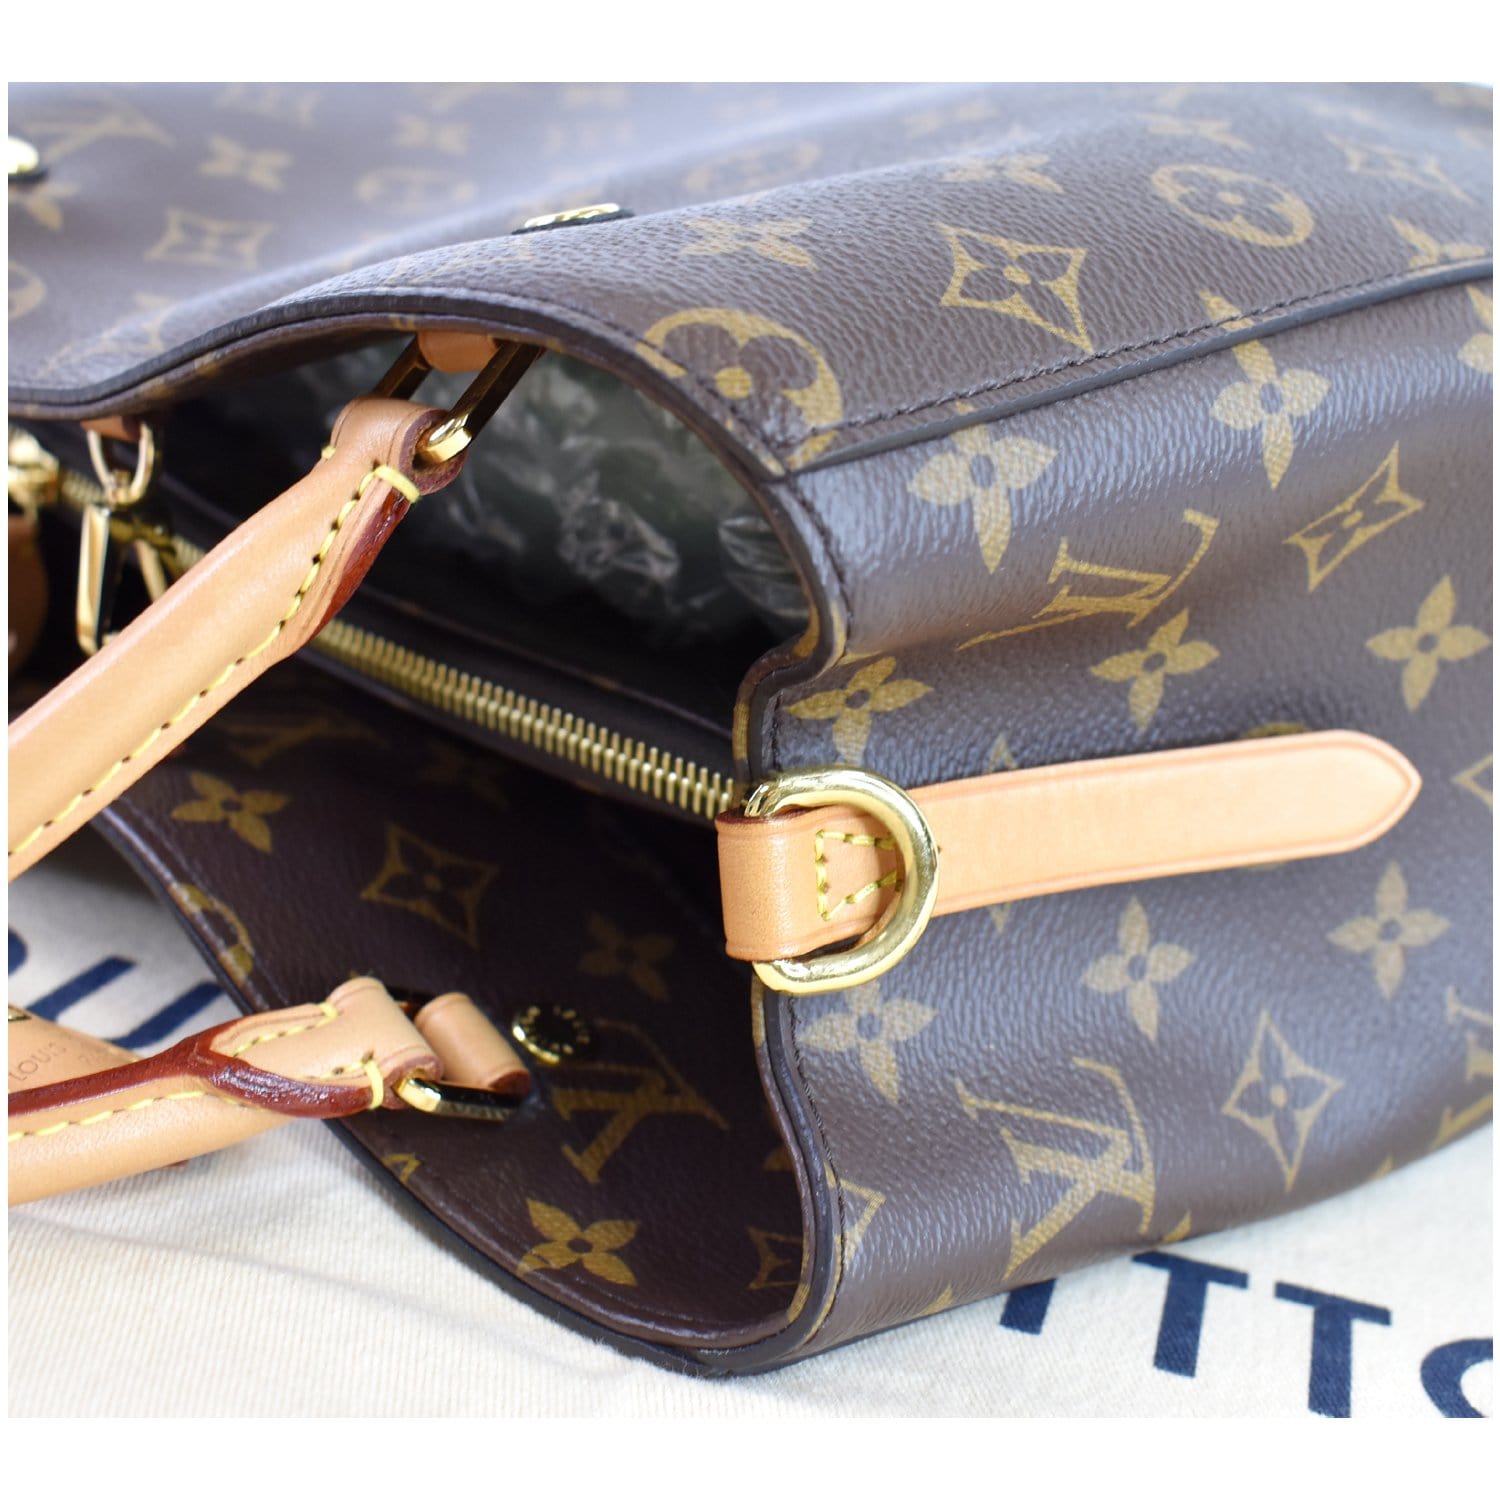 Montaigne cloth handbag Louis Vuitton Brown in Cloth - 26126866